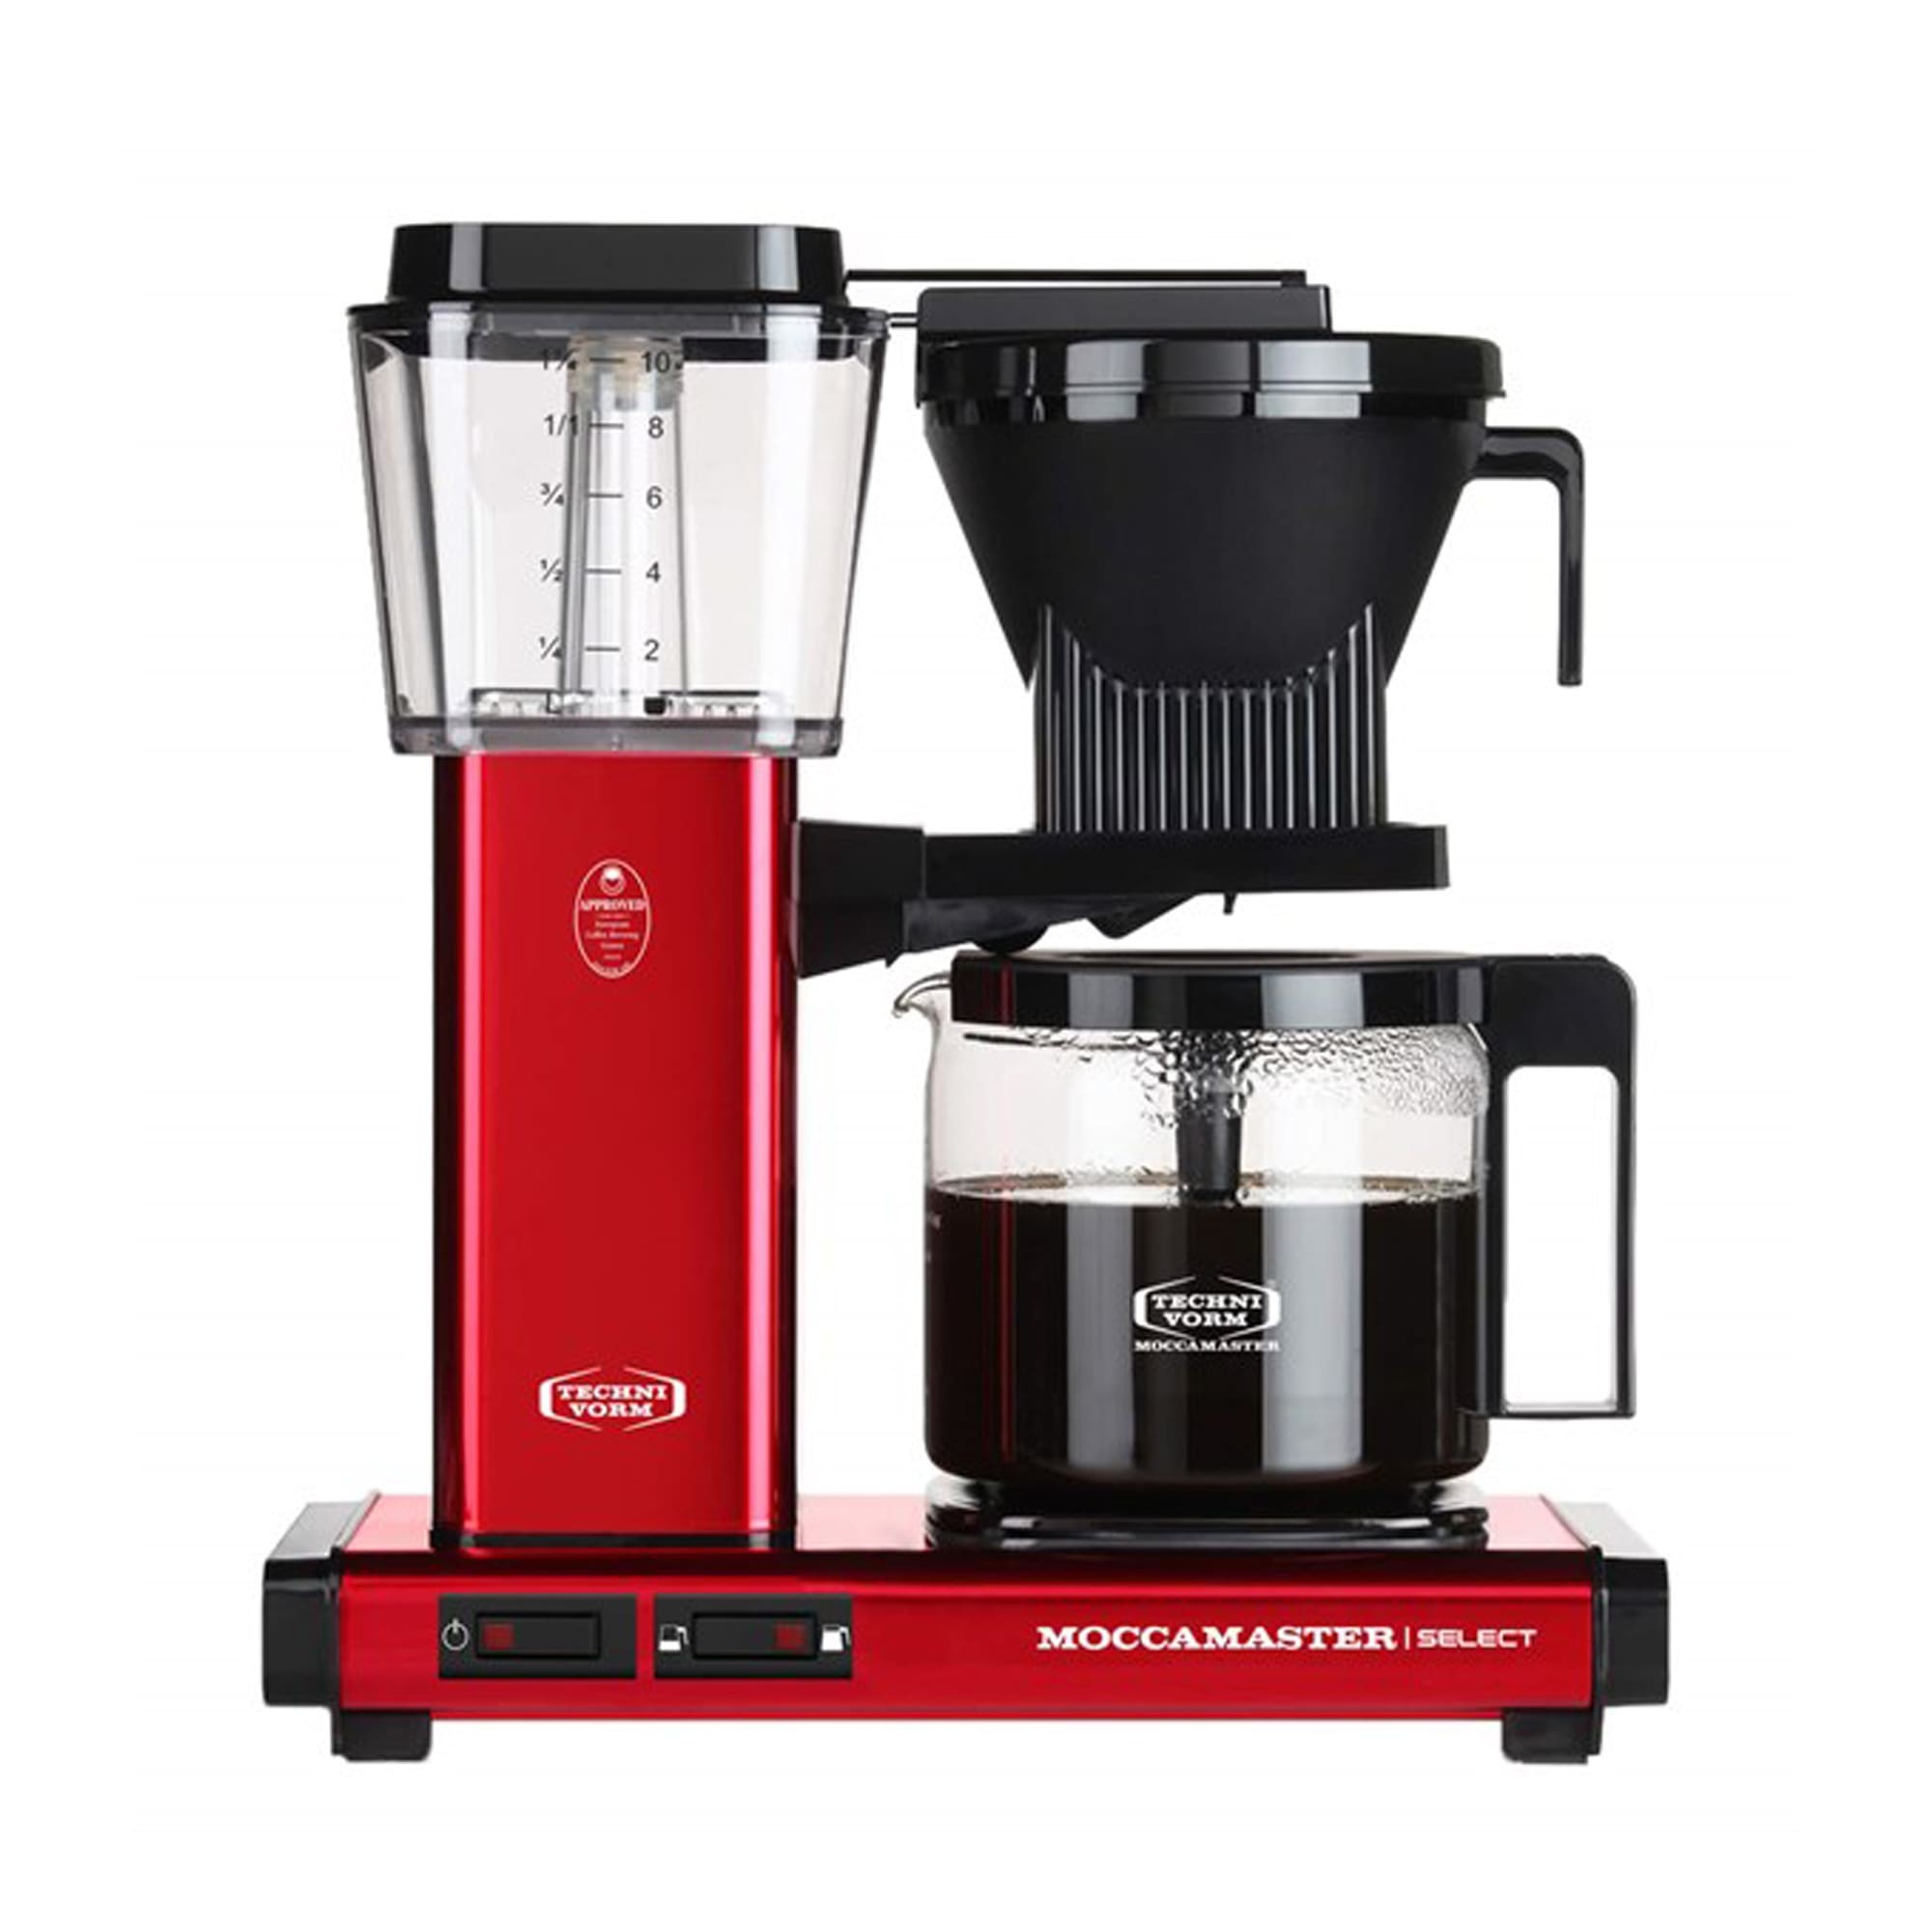 Moccamaster Select Filtre Kahve Makinesi Cam Potlu - Metalik Kırmızı